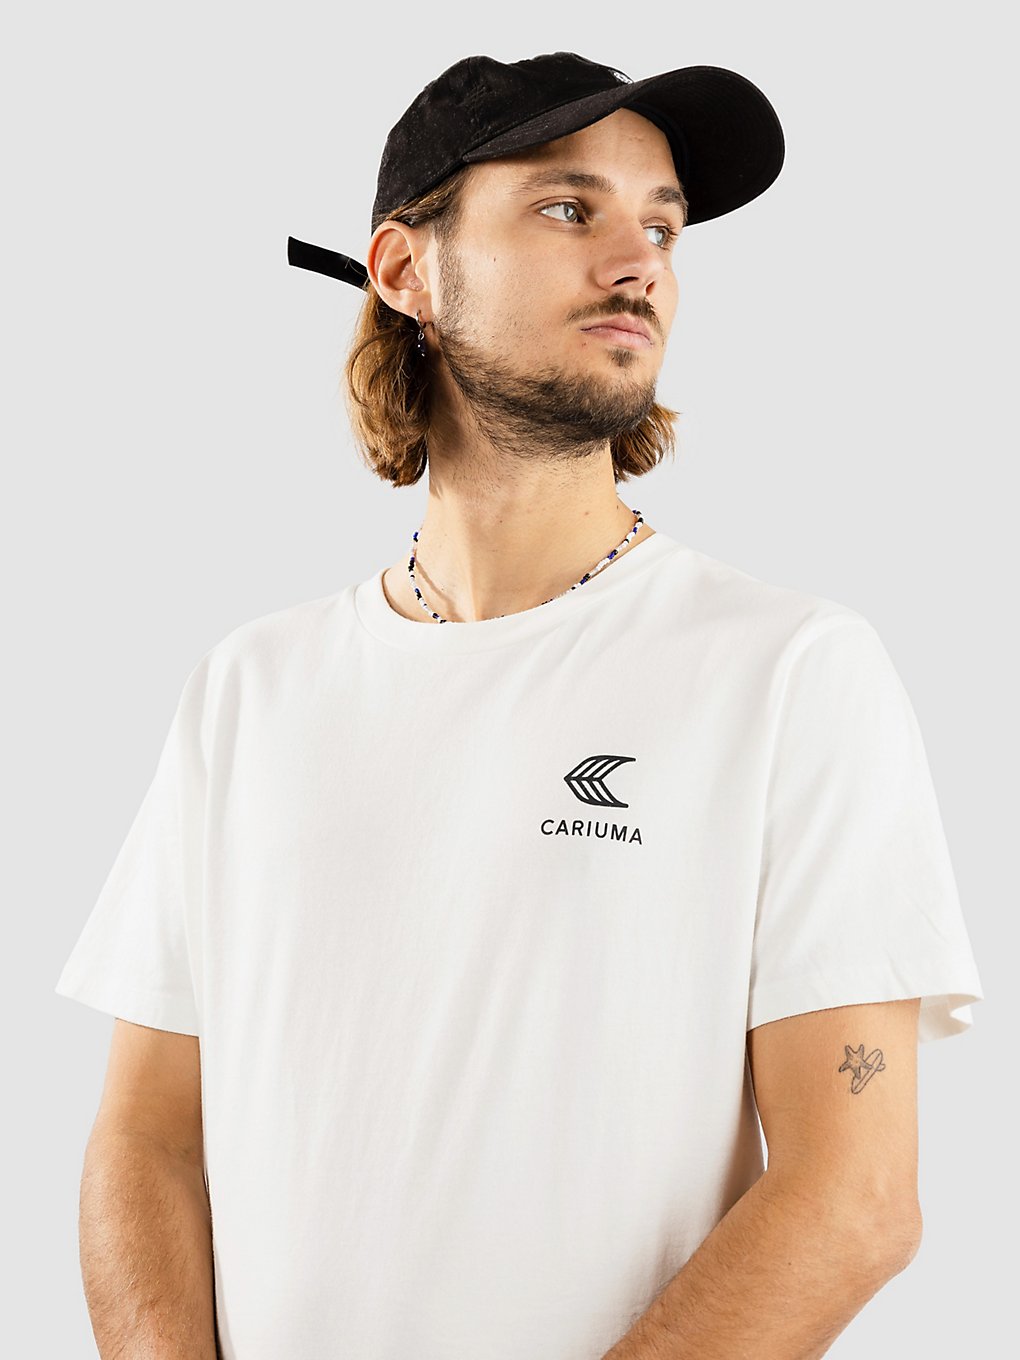 Cariuma Small Logo T-Shirt white kaufen